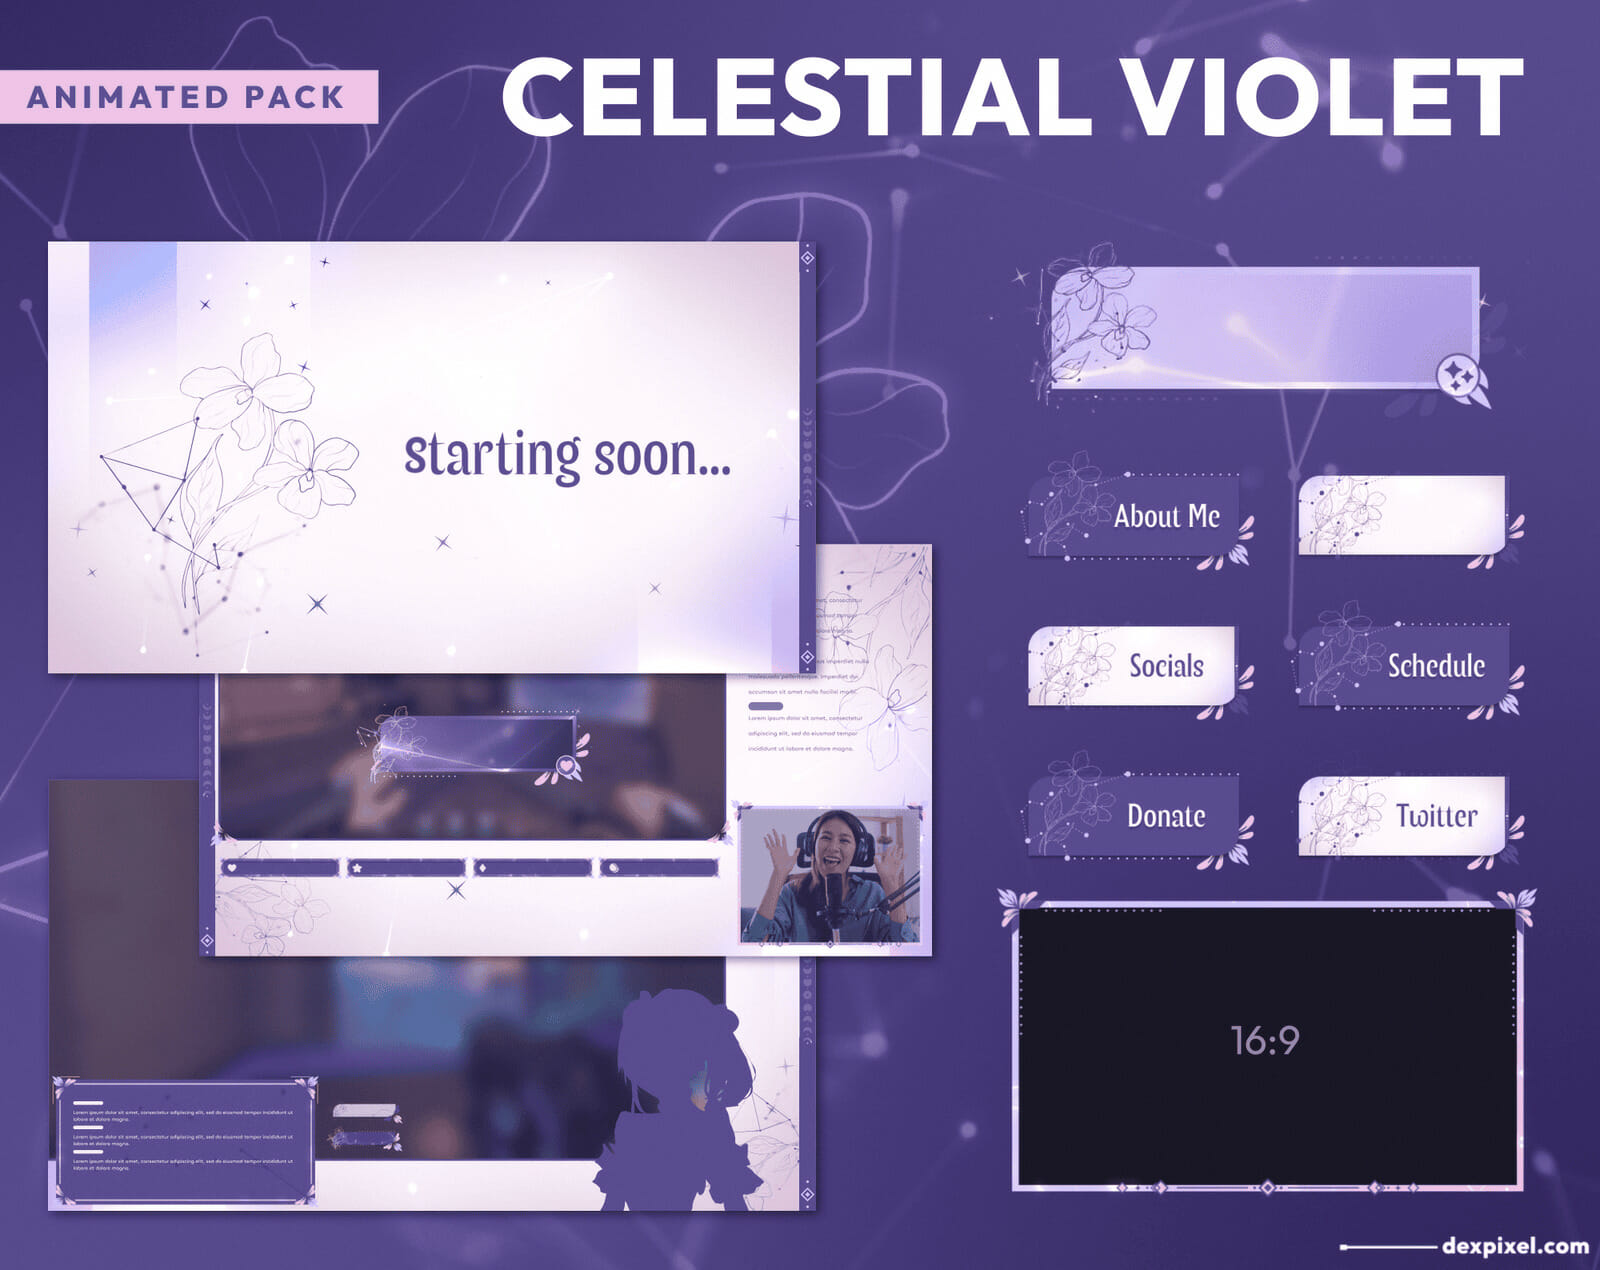 Ghostly Purple Overlays Twitch Streamer Overlays & Scenes 